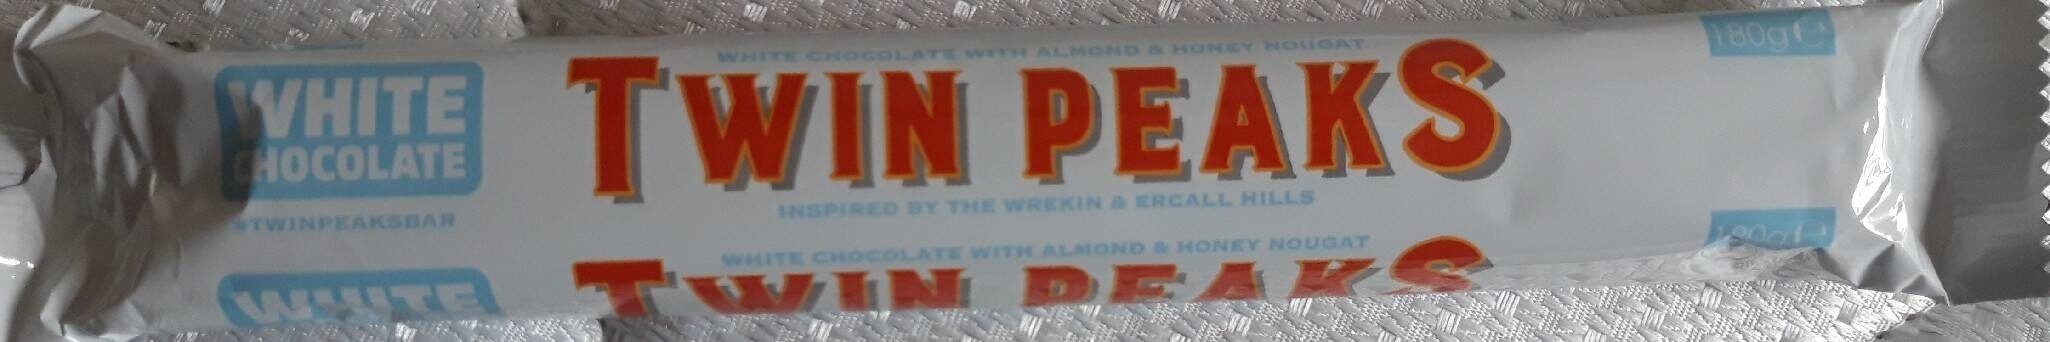 Twin Peaks - Product